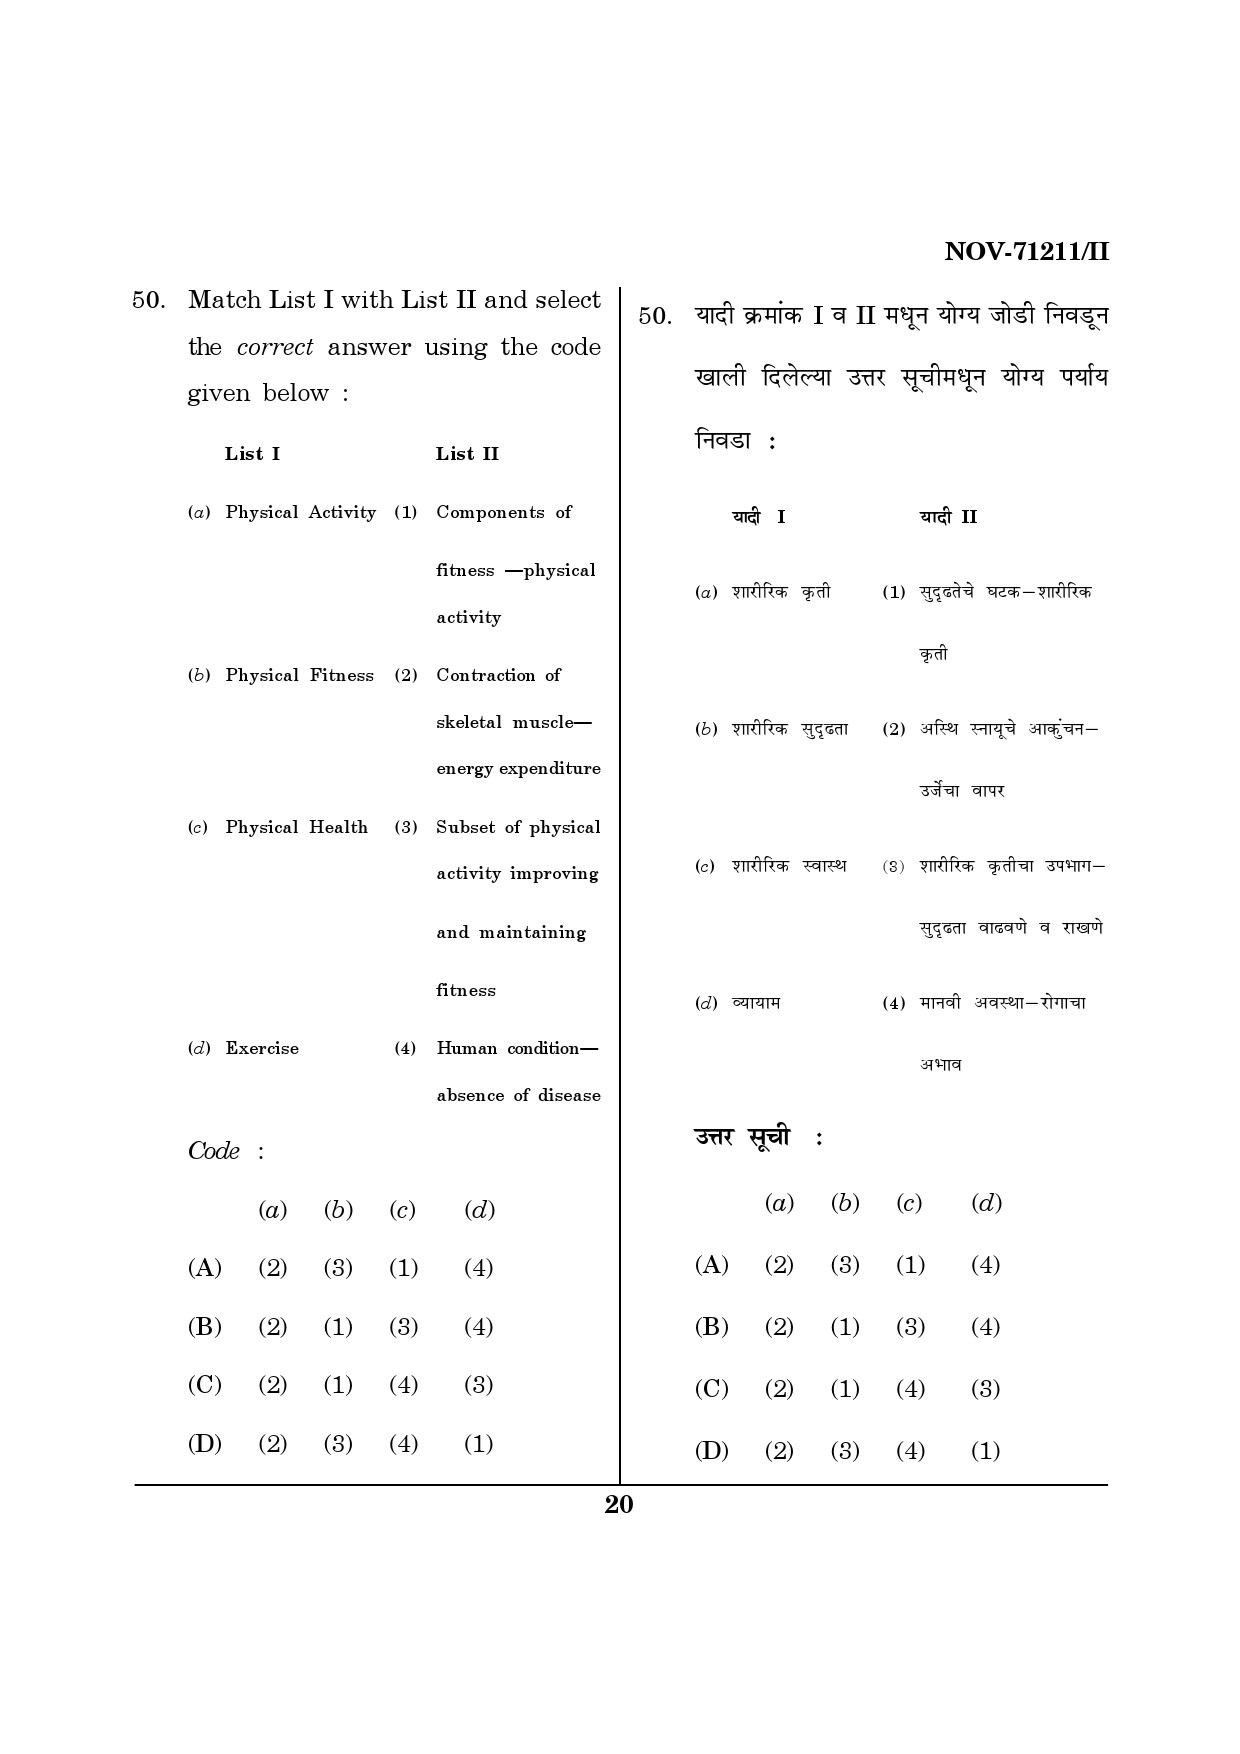 Maharashtra SET Physical Education Question Paper II November 2011 20